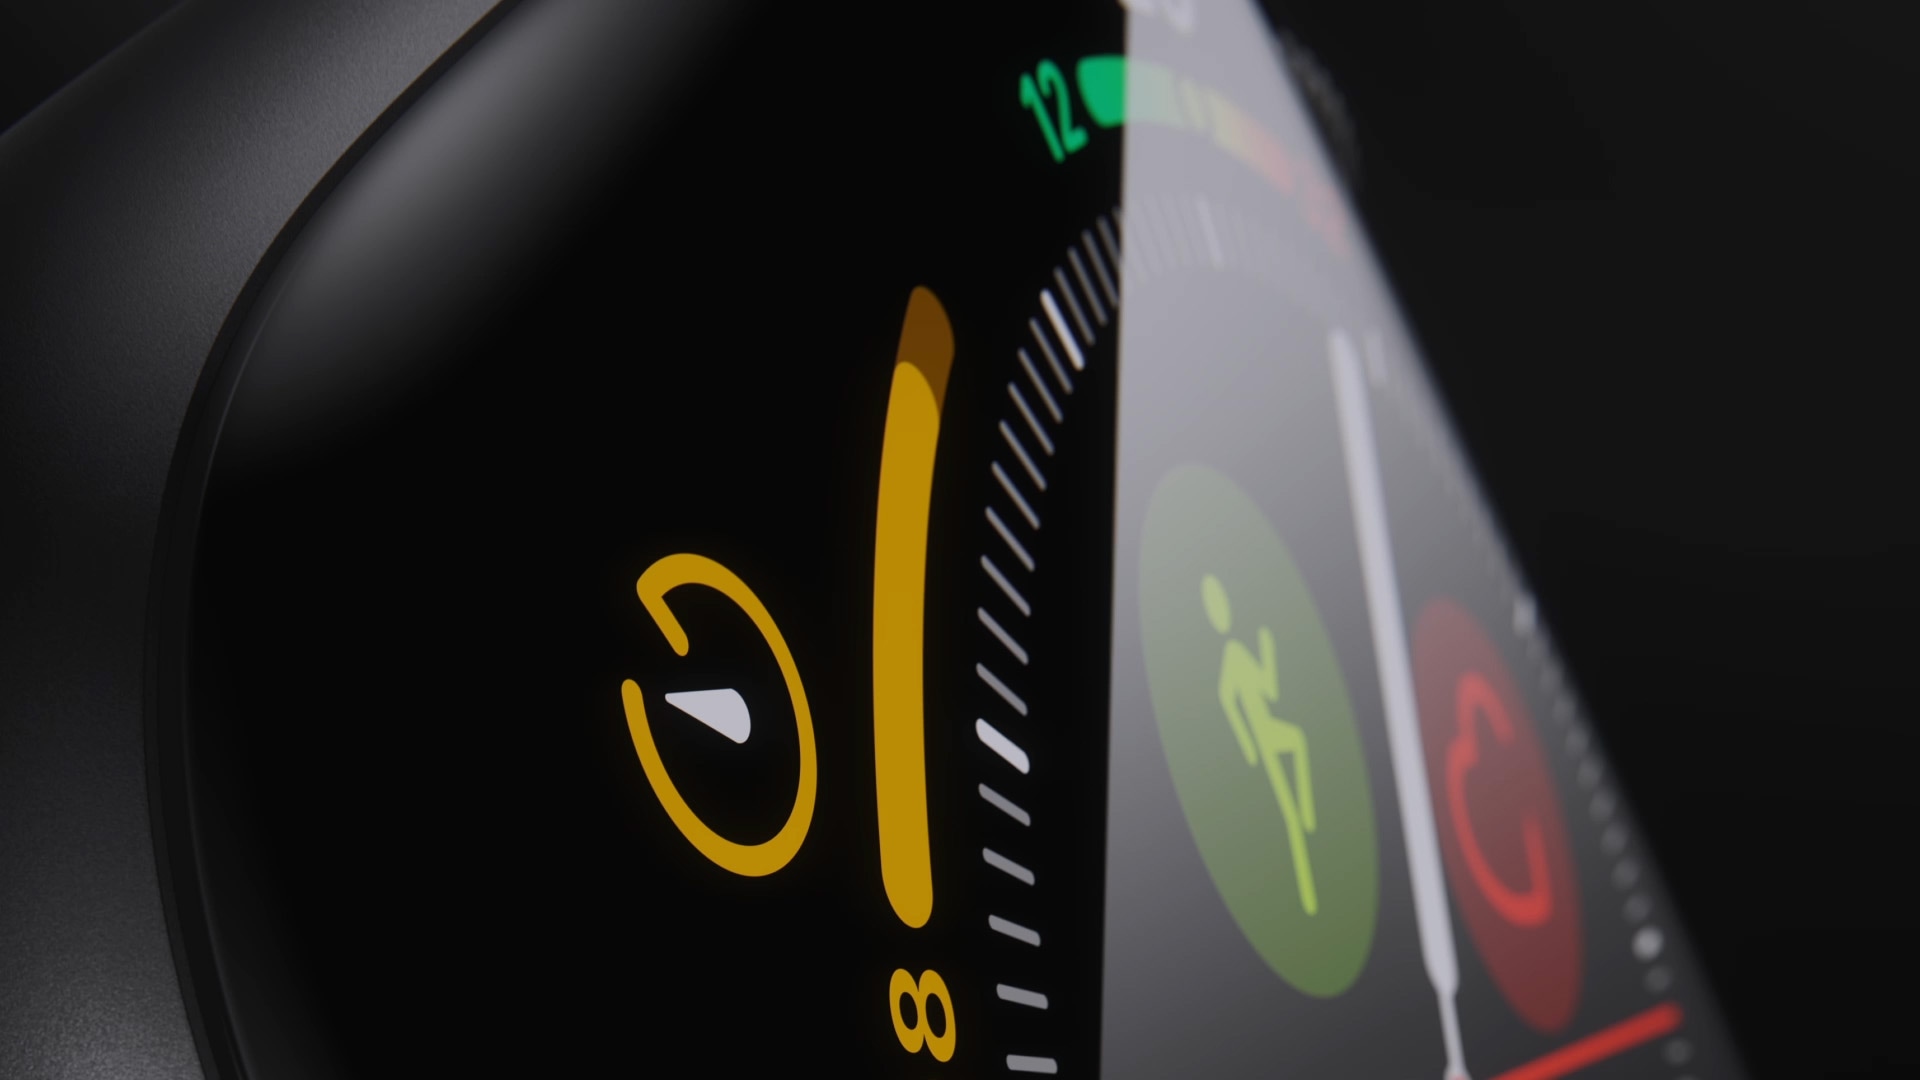 Apple Watch Series 4 Screen Wins “Display of the Year” Award